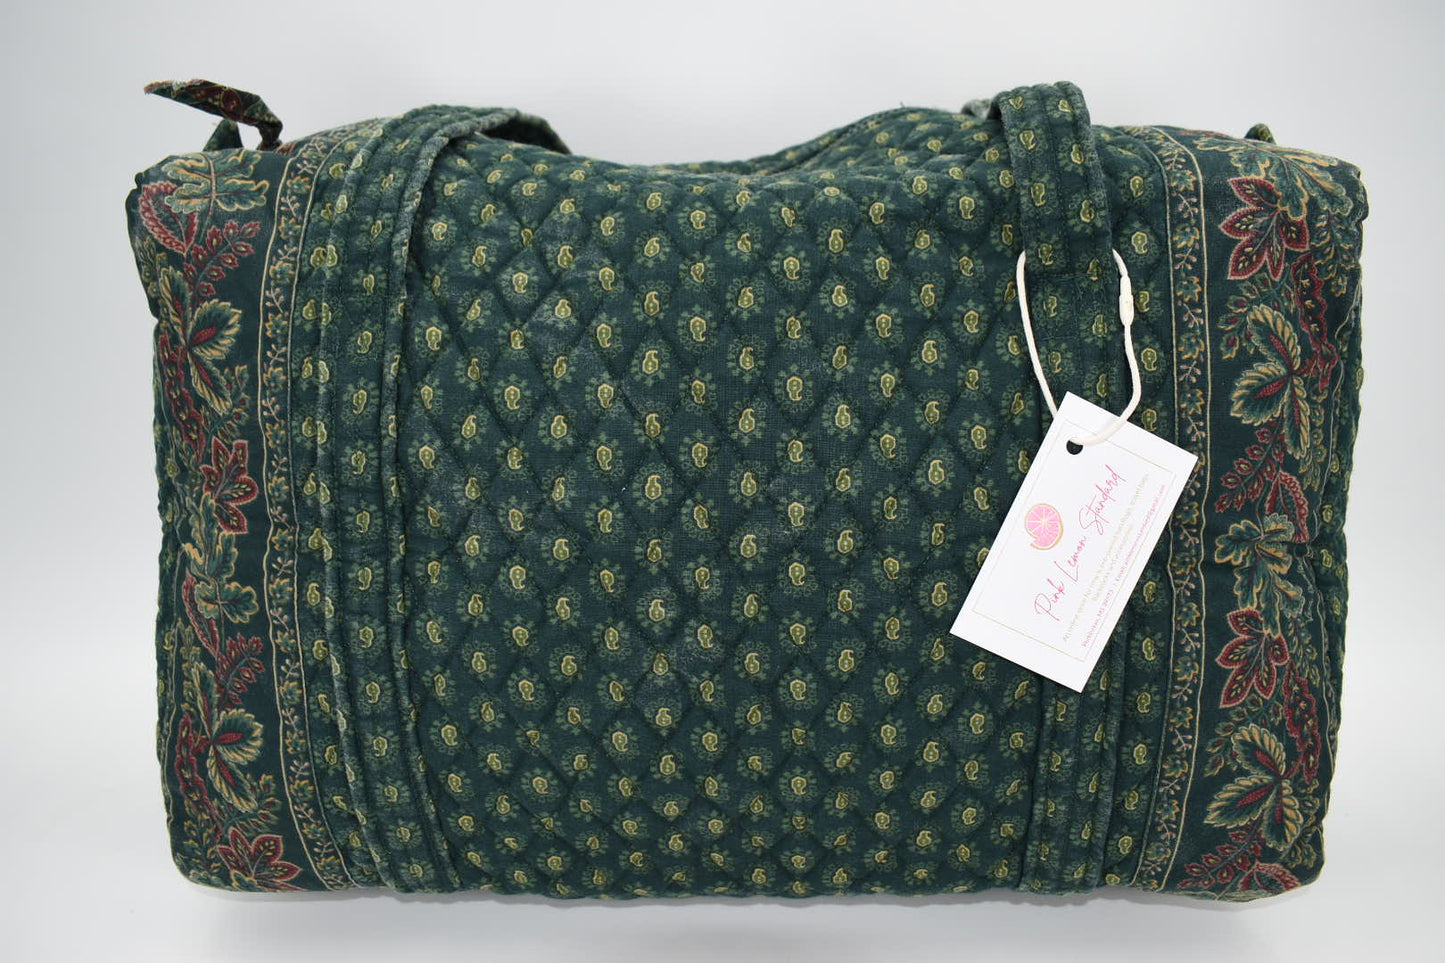 Vintage Vera Bradley Medium Duffel Bag in Classic Green-1998 Pattern